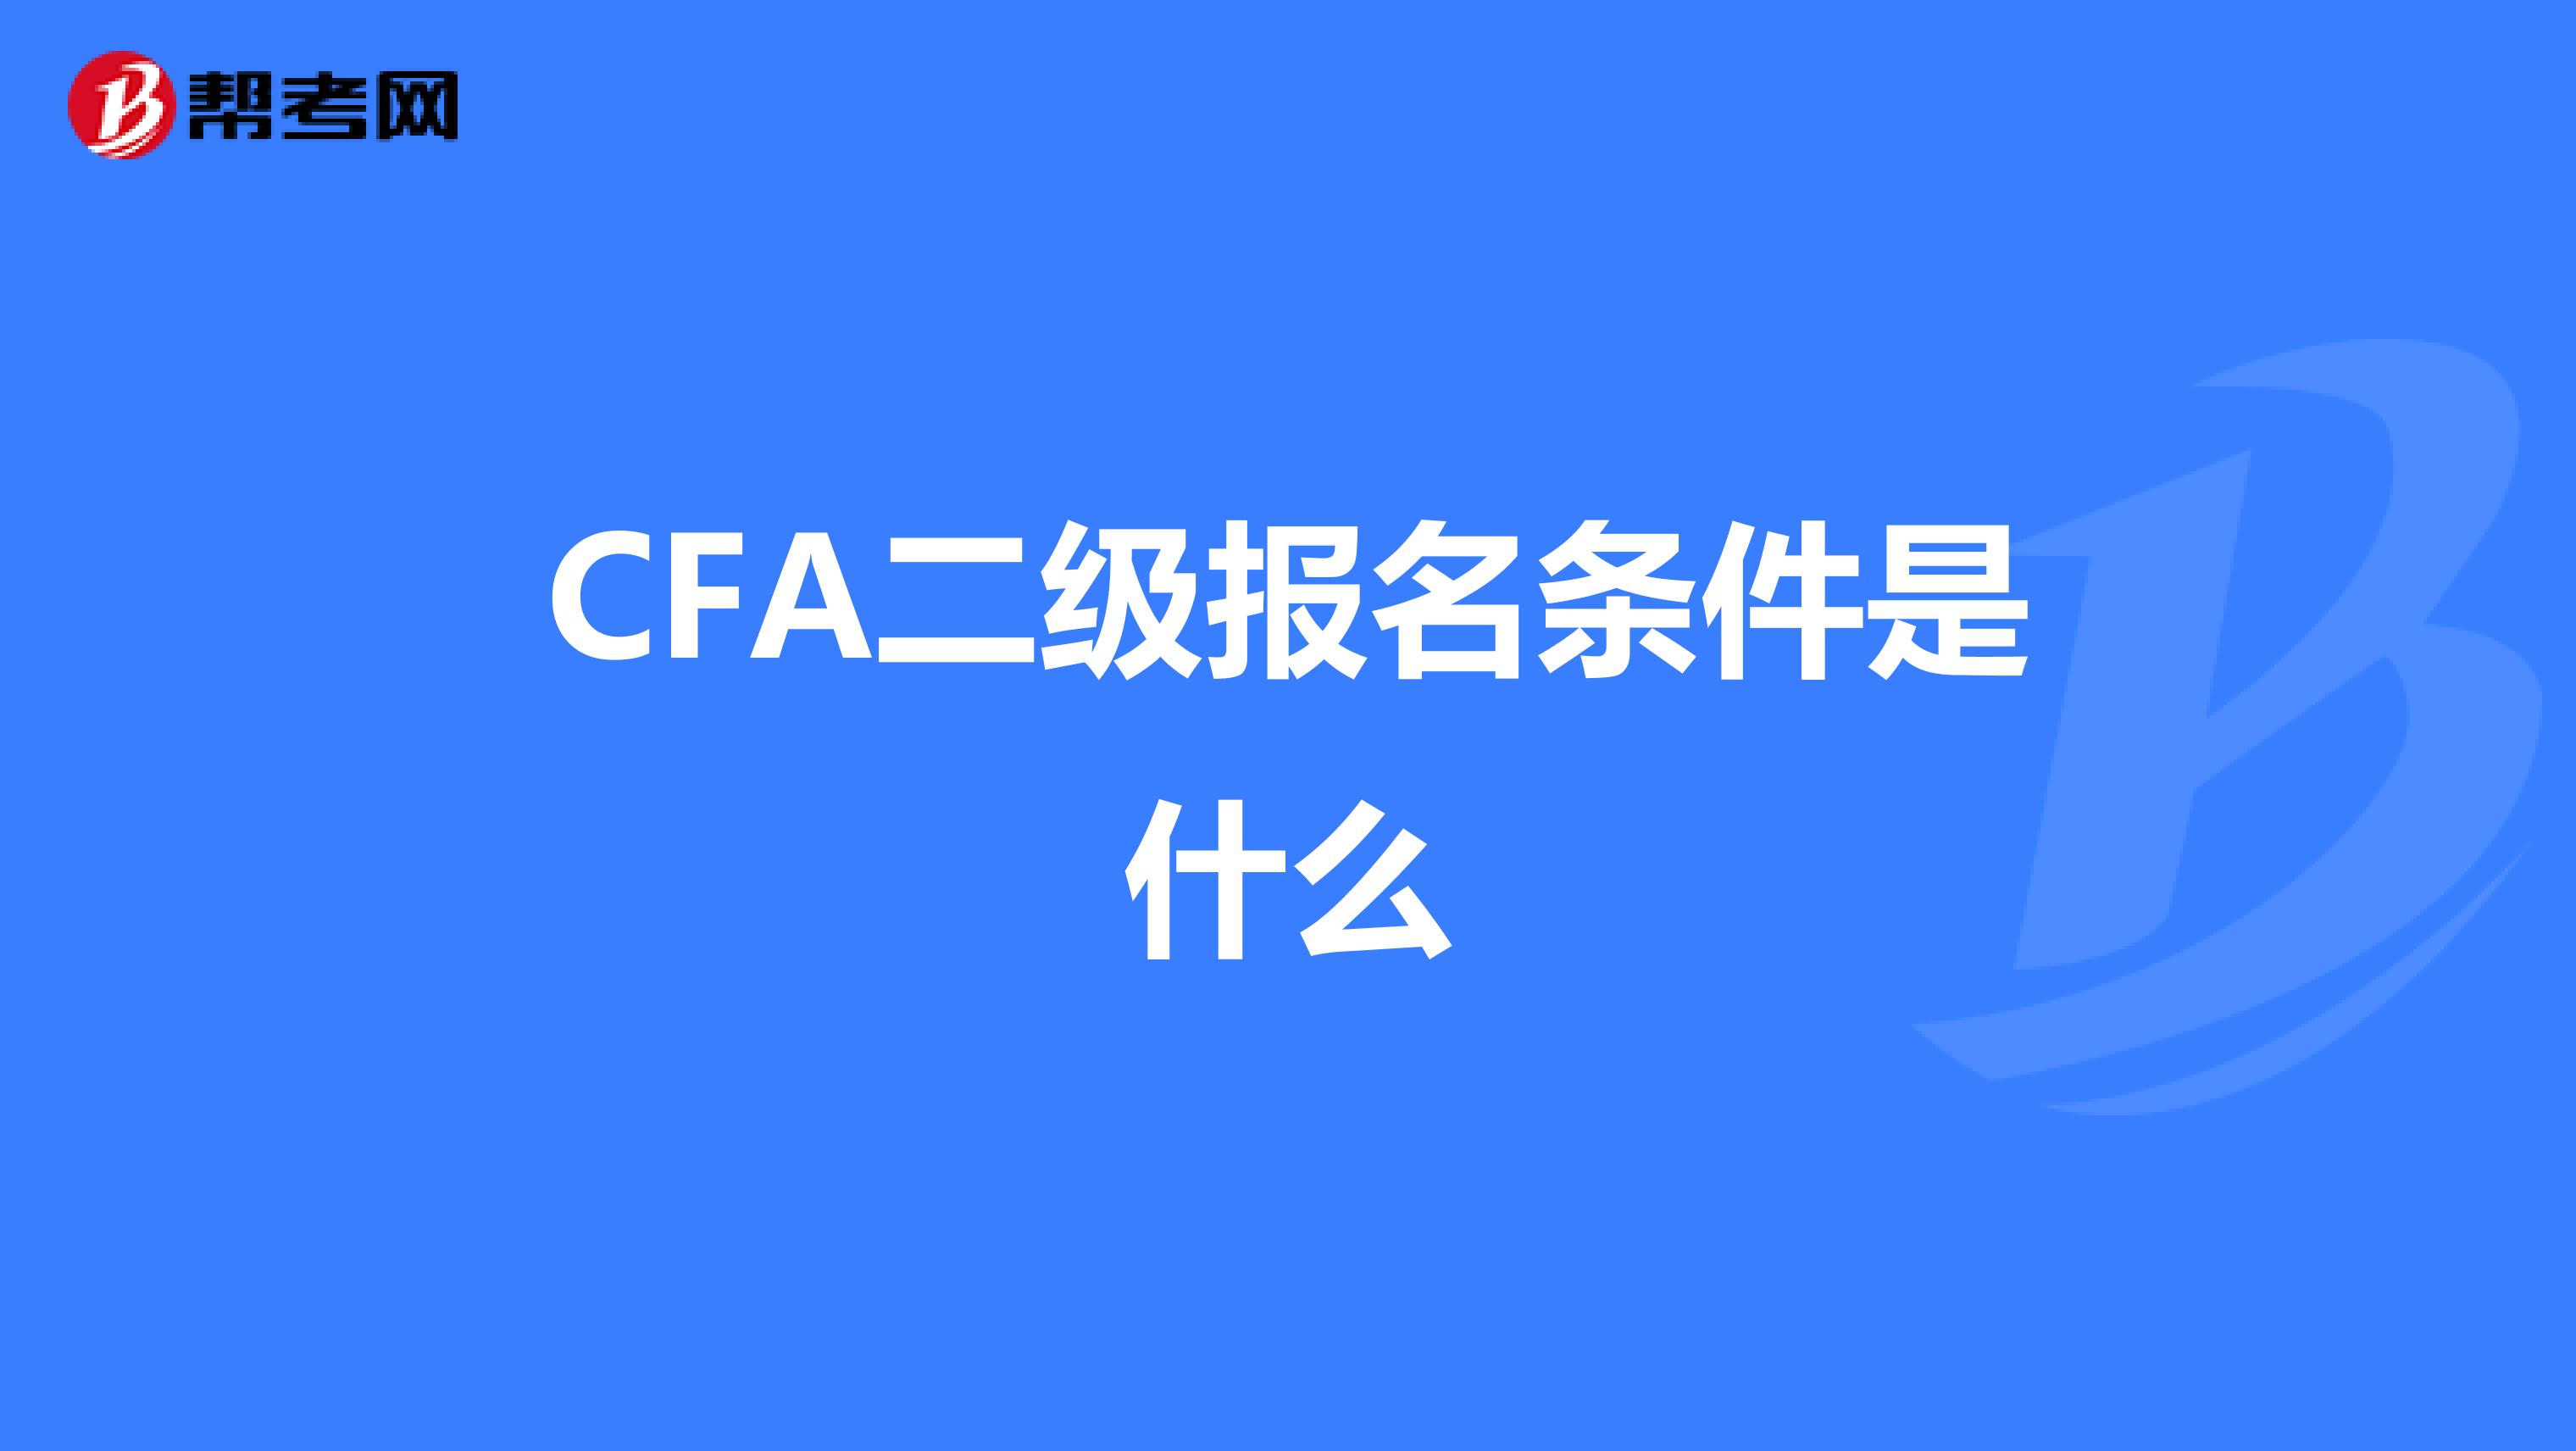 CFA二级报名条件是什么